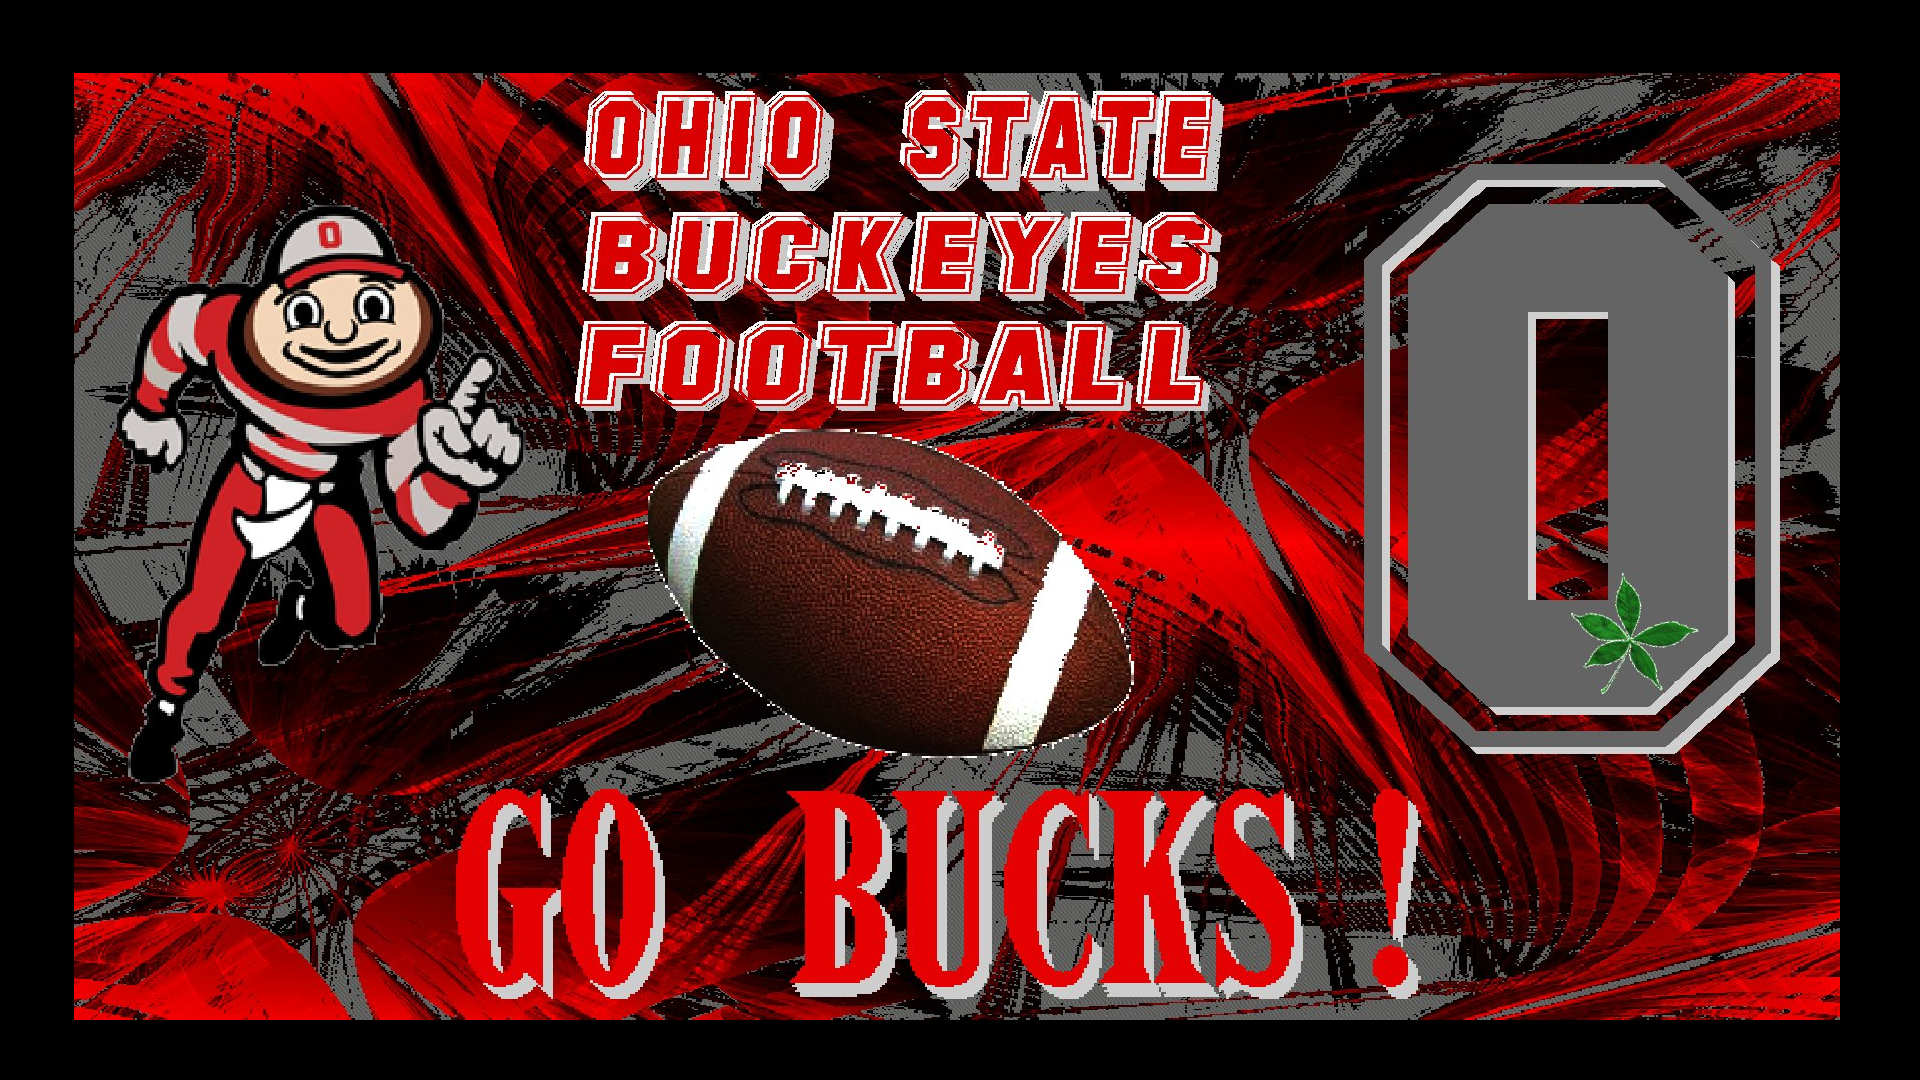 OHIO STATE BUCKEYES FOOTBALL, GO BUCKS - Ohio State Football